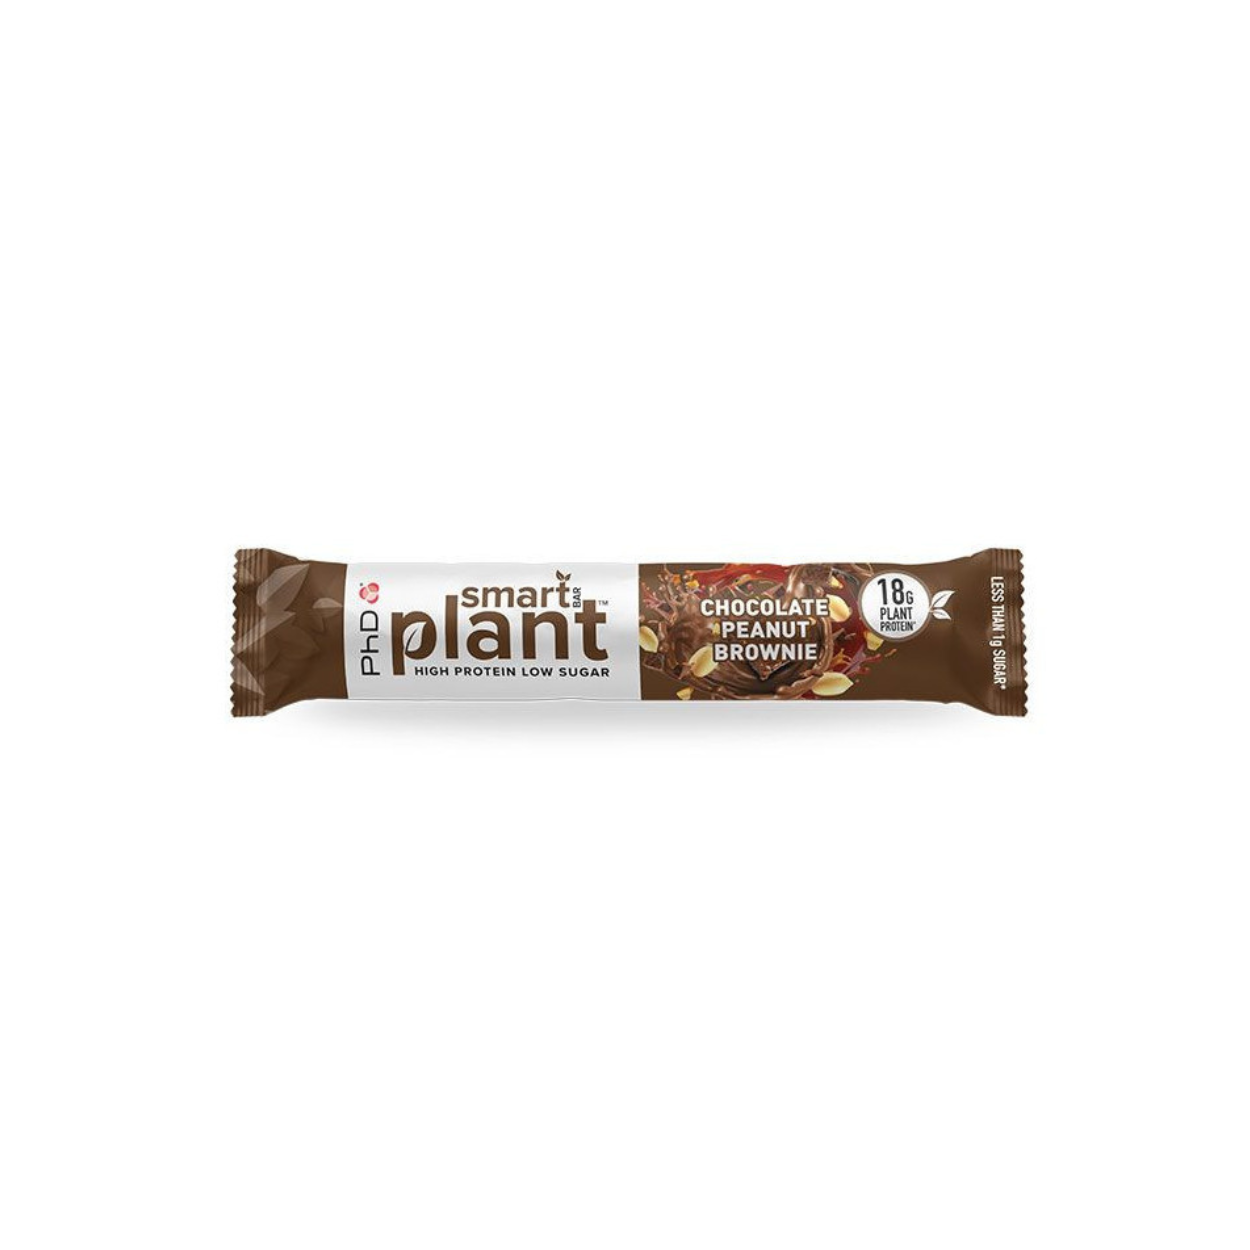 PhD Smart Bar Riegel Plant Choc Peanut Brownie (1-12x64g)